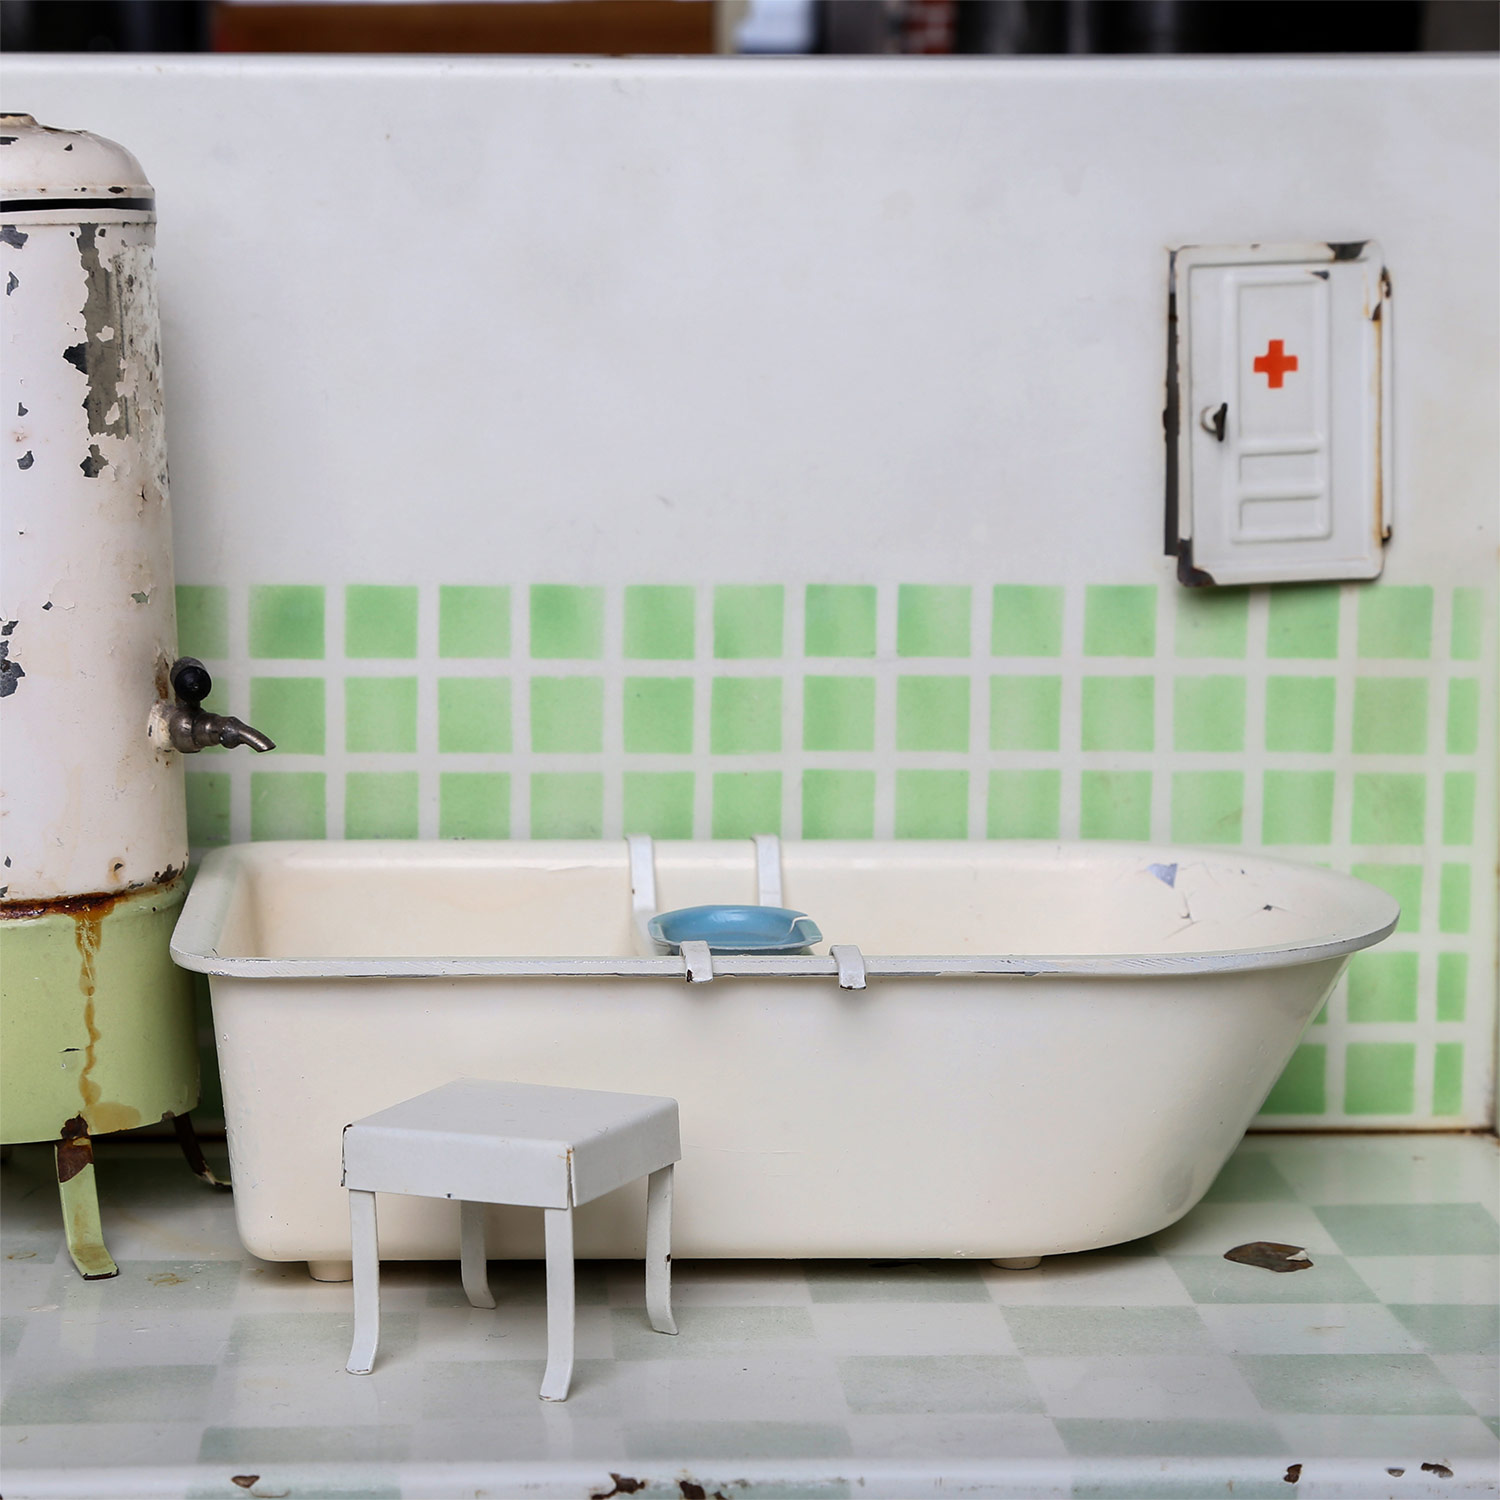 KIBRI Puppenbadezimmer, 1950er Jahre, Blech, beige-grüner Kacheldekor, Toilettenschüssel u. - Image 4 of 7